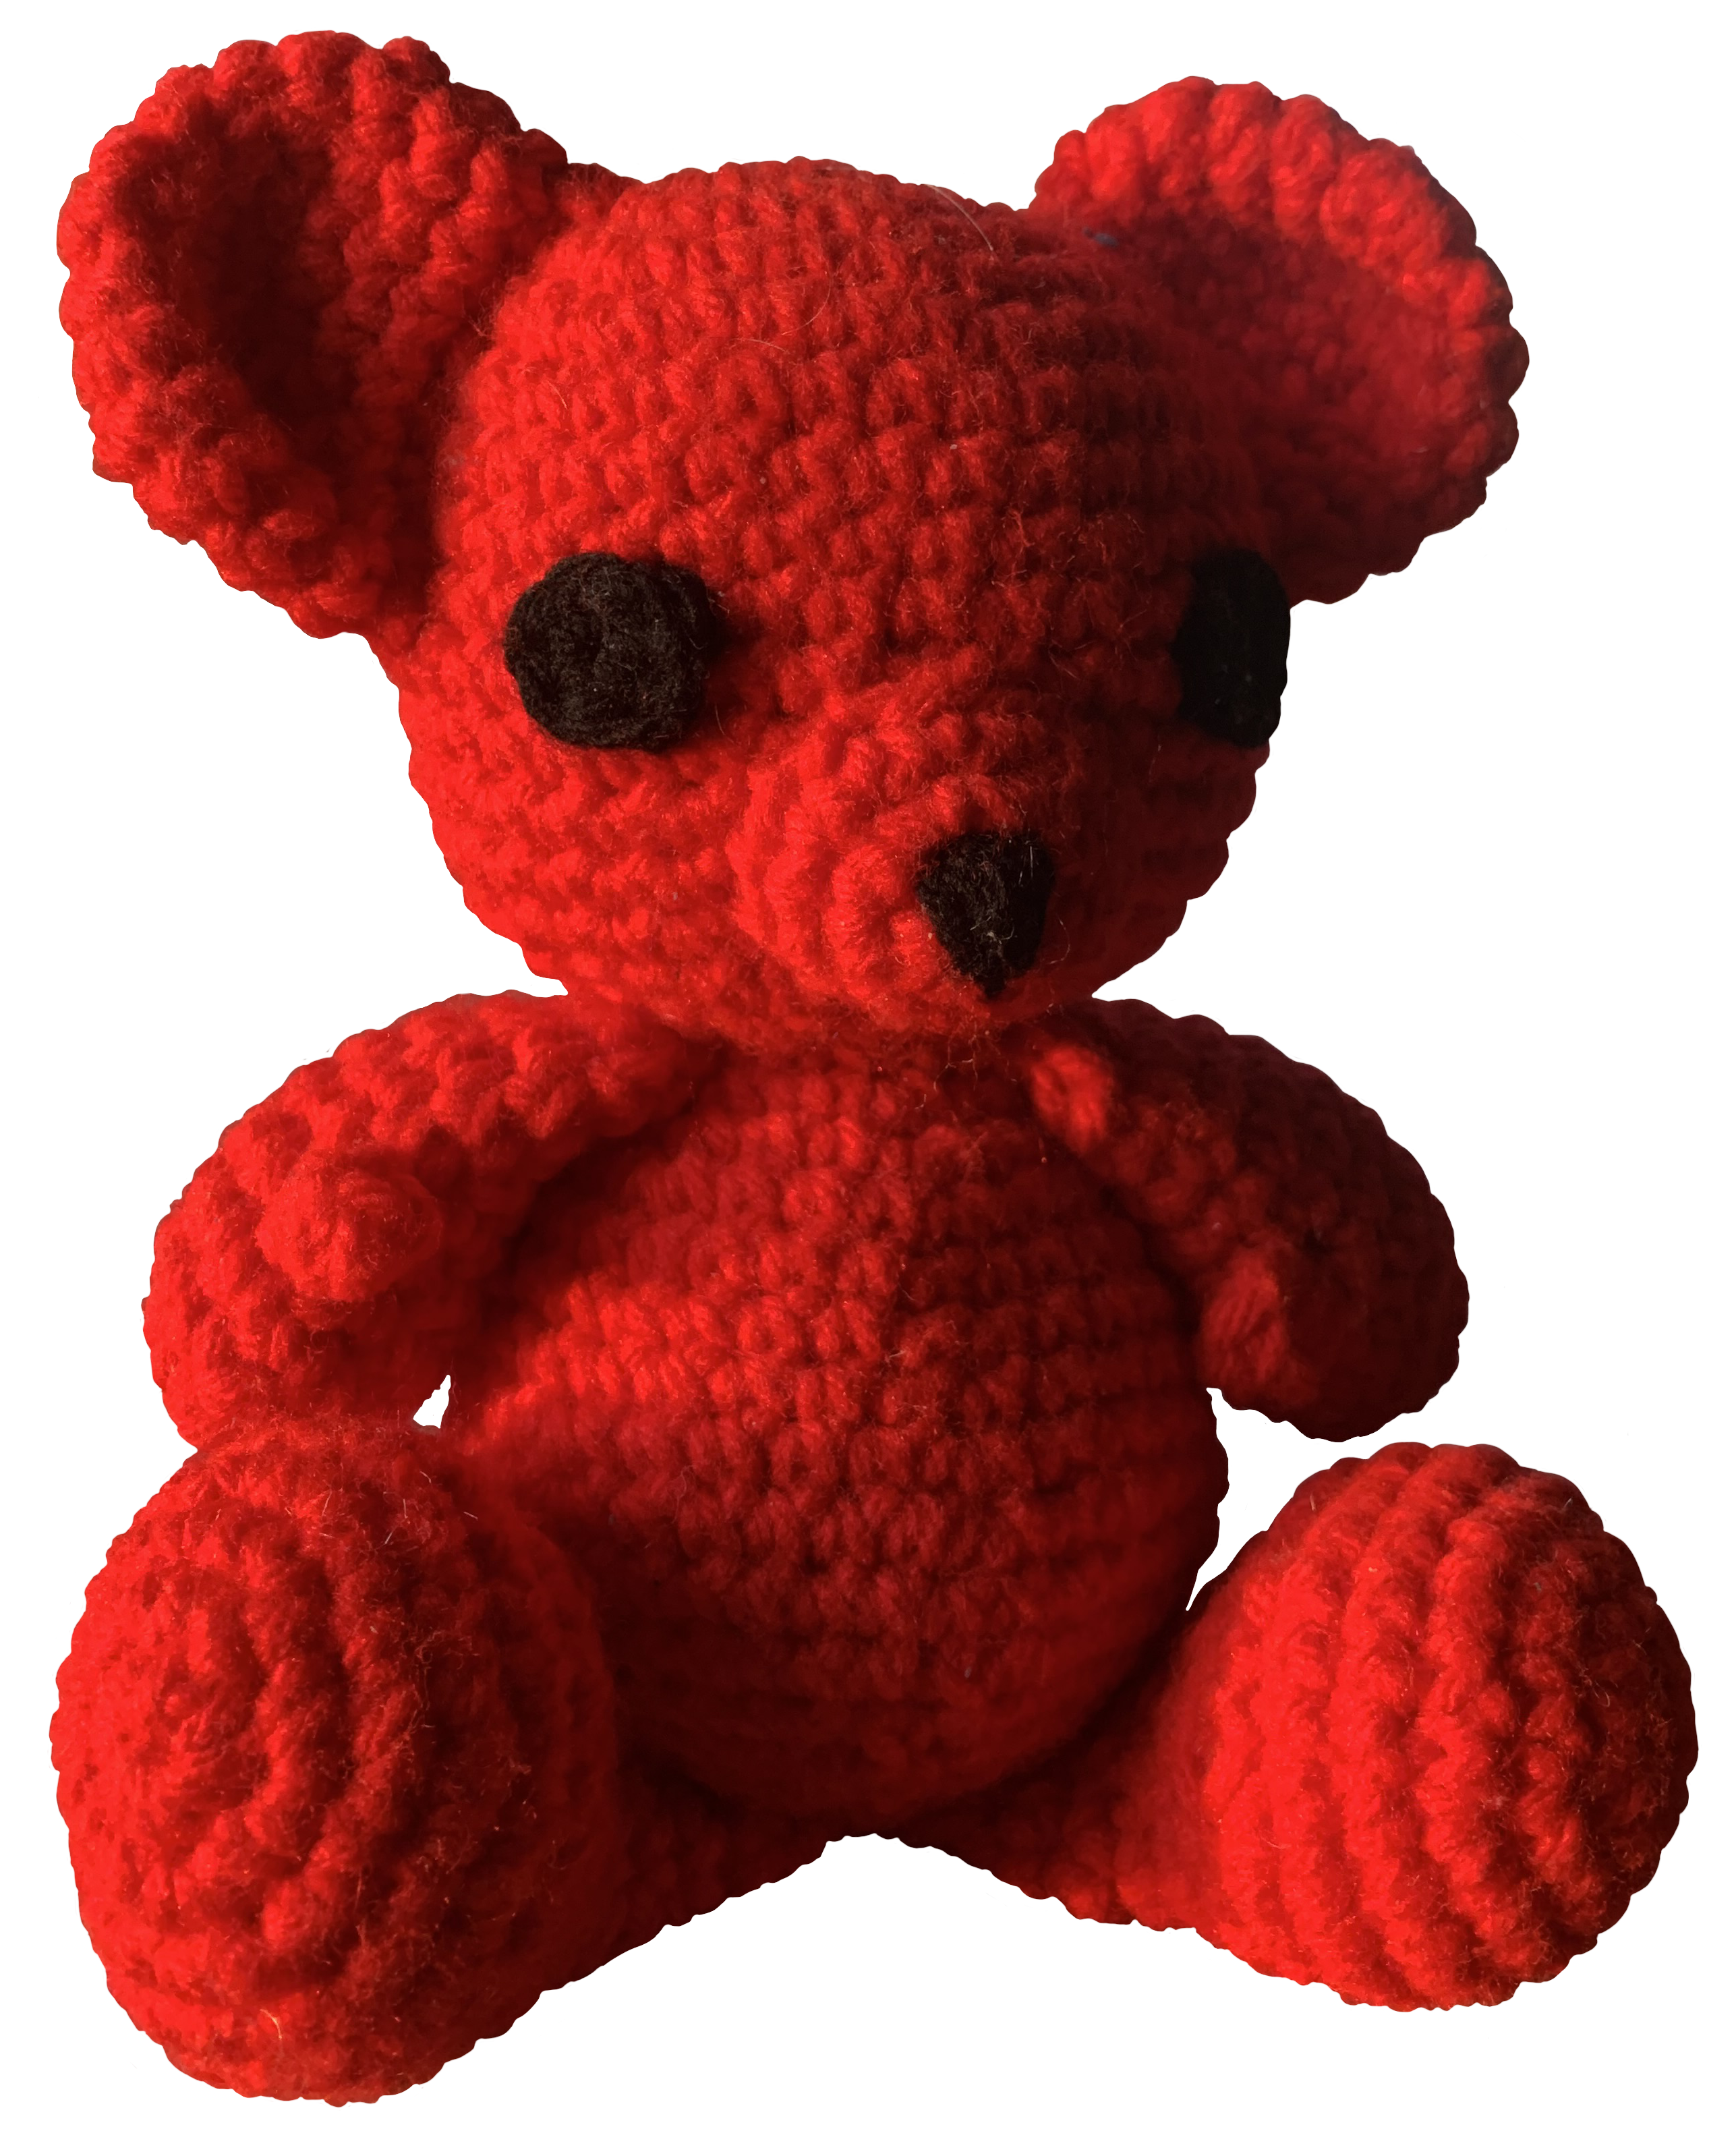 red crochet teddy bear